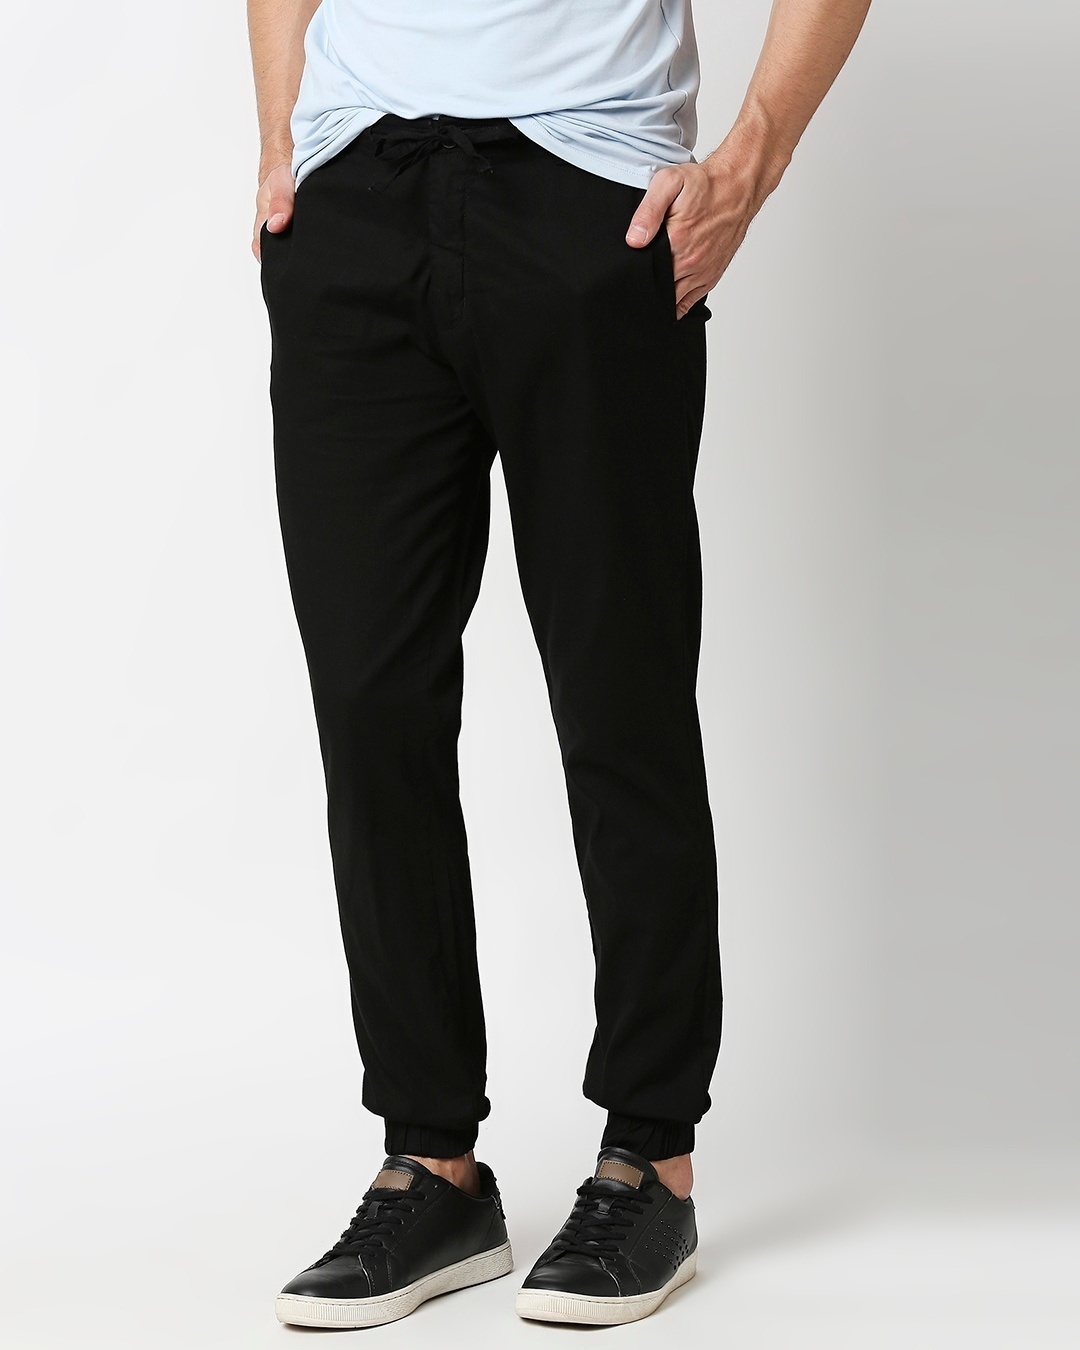 adidas Essential Jogger Pants (Plus Size) - Black | Women's Golf | adidas US